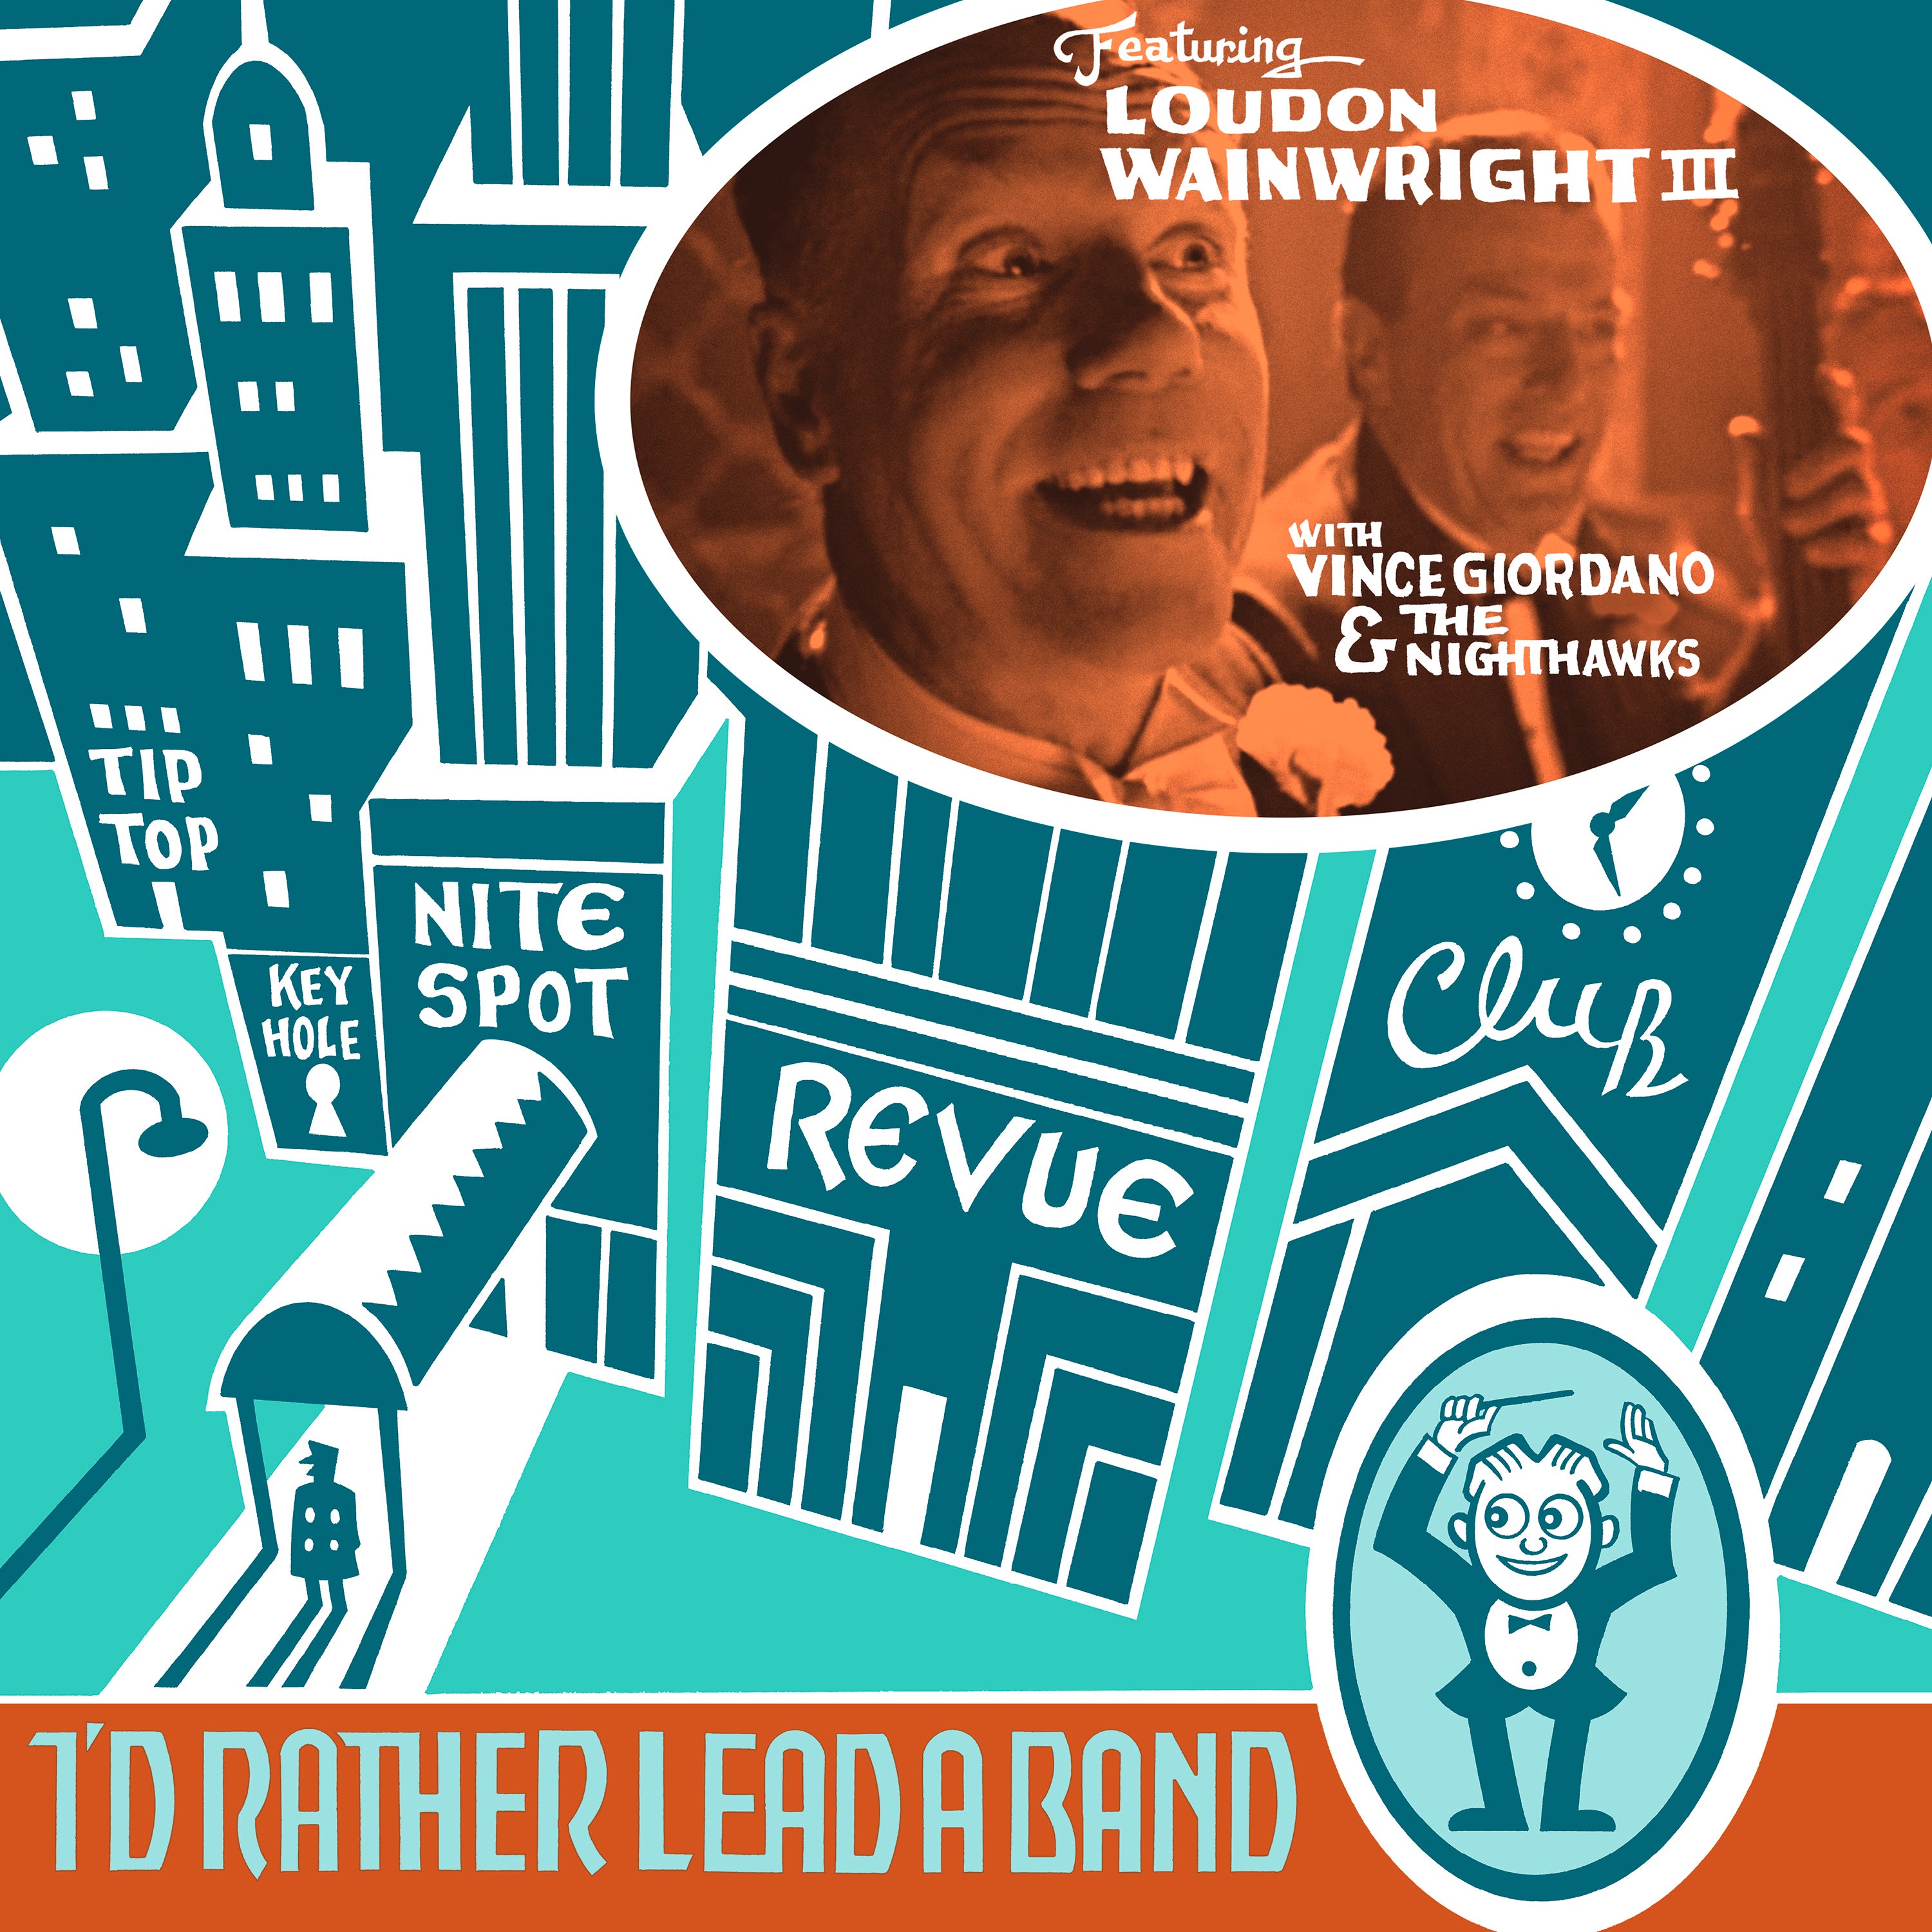 Music Review - Loudon Wainwright